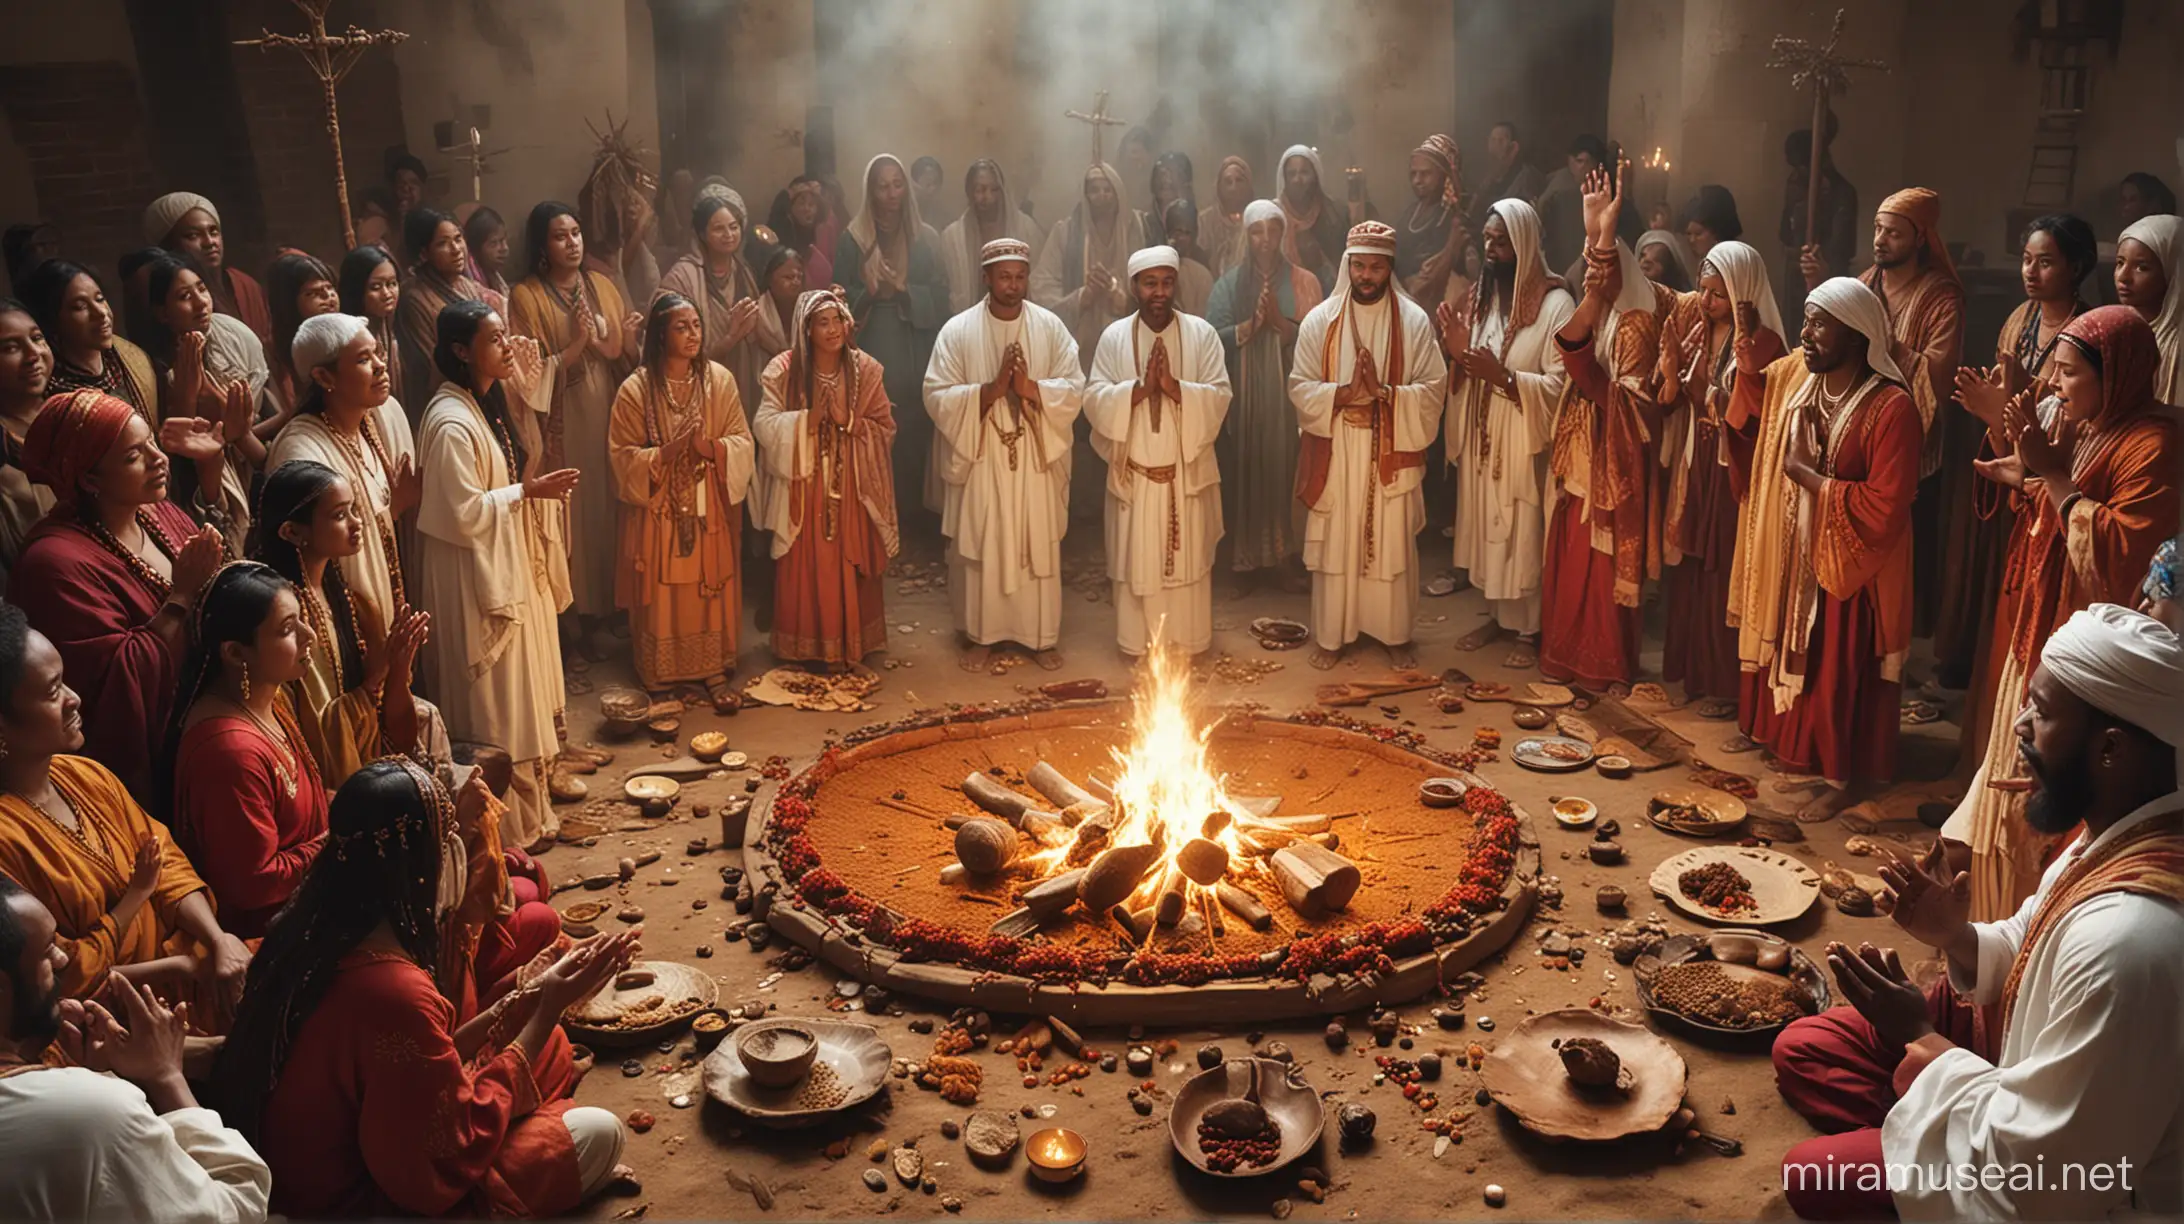 Diverse Worship Practices Celebrating Cultural Varieties after Divine Intervention